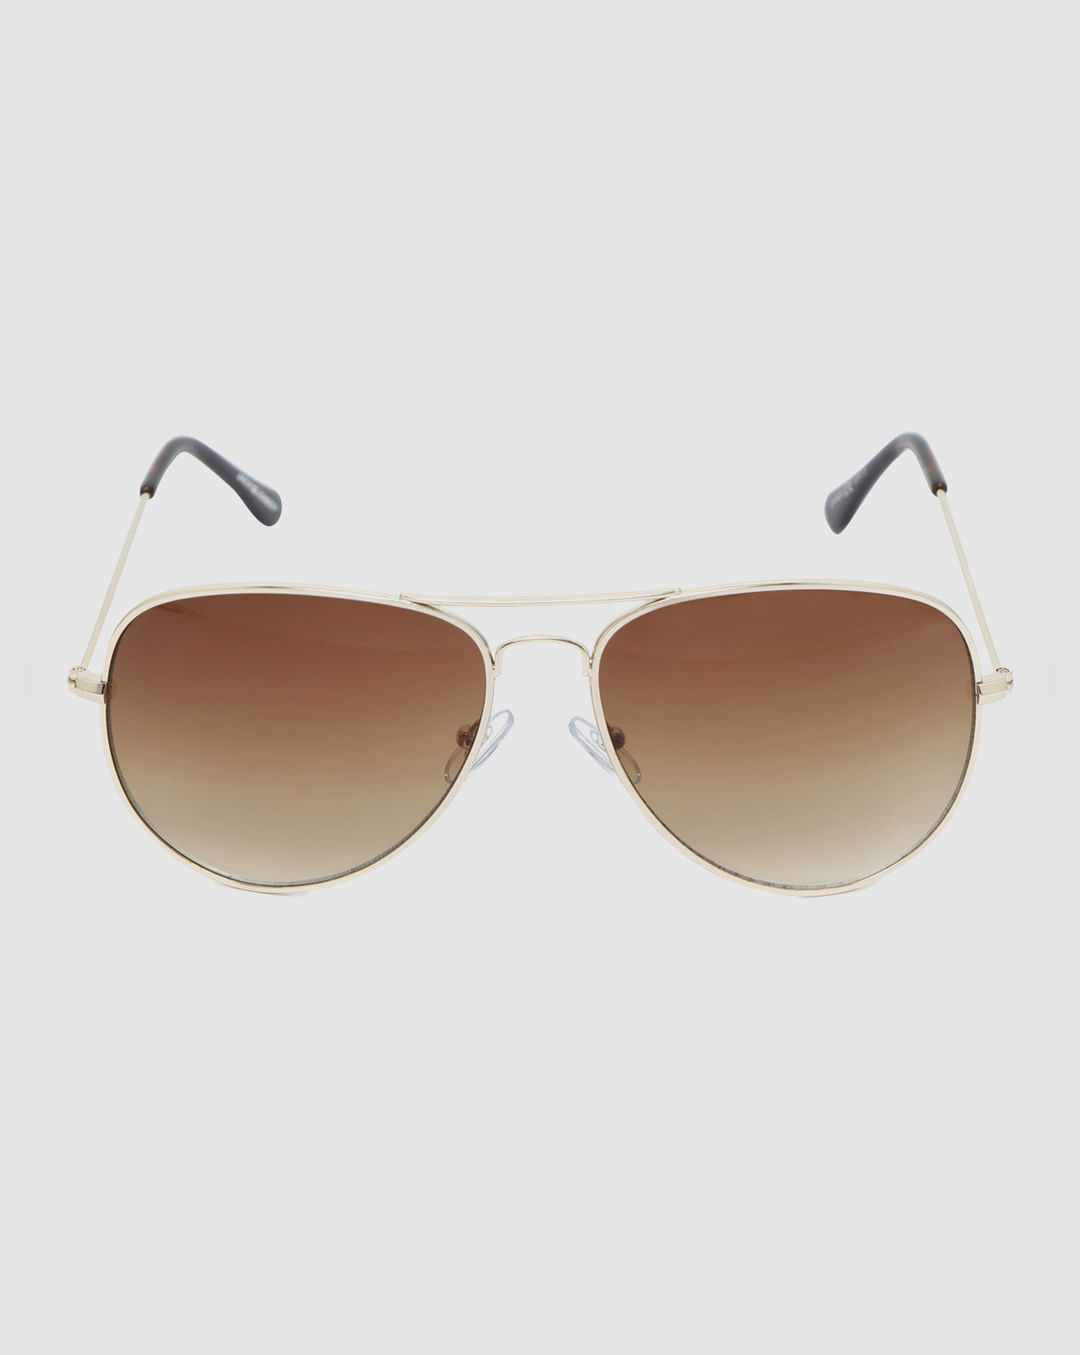 Buy Brown Aviator Sunglasses for Men